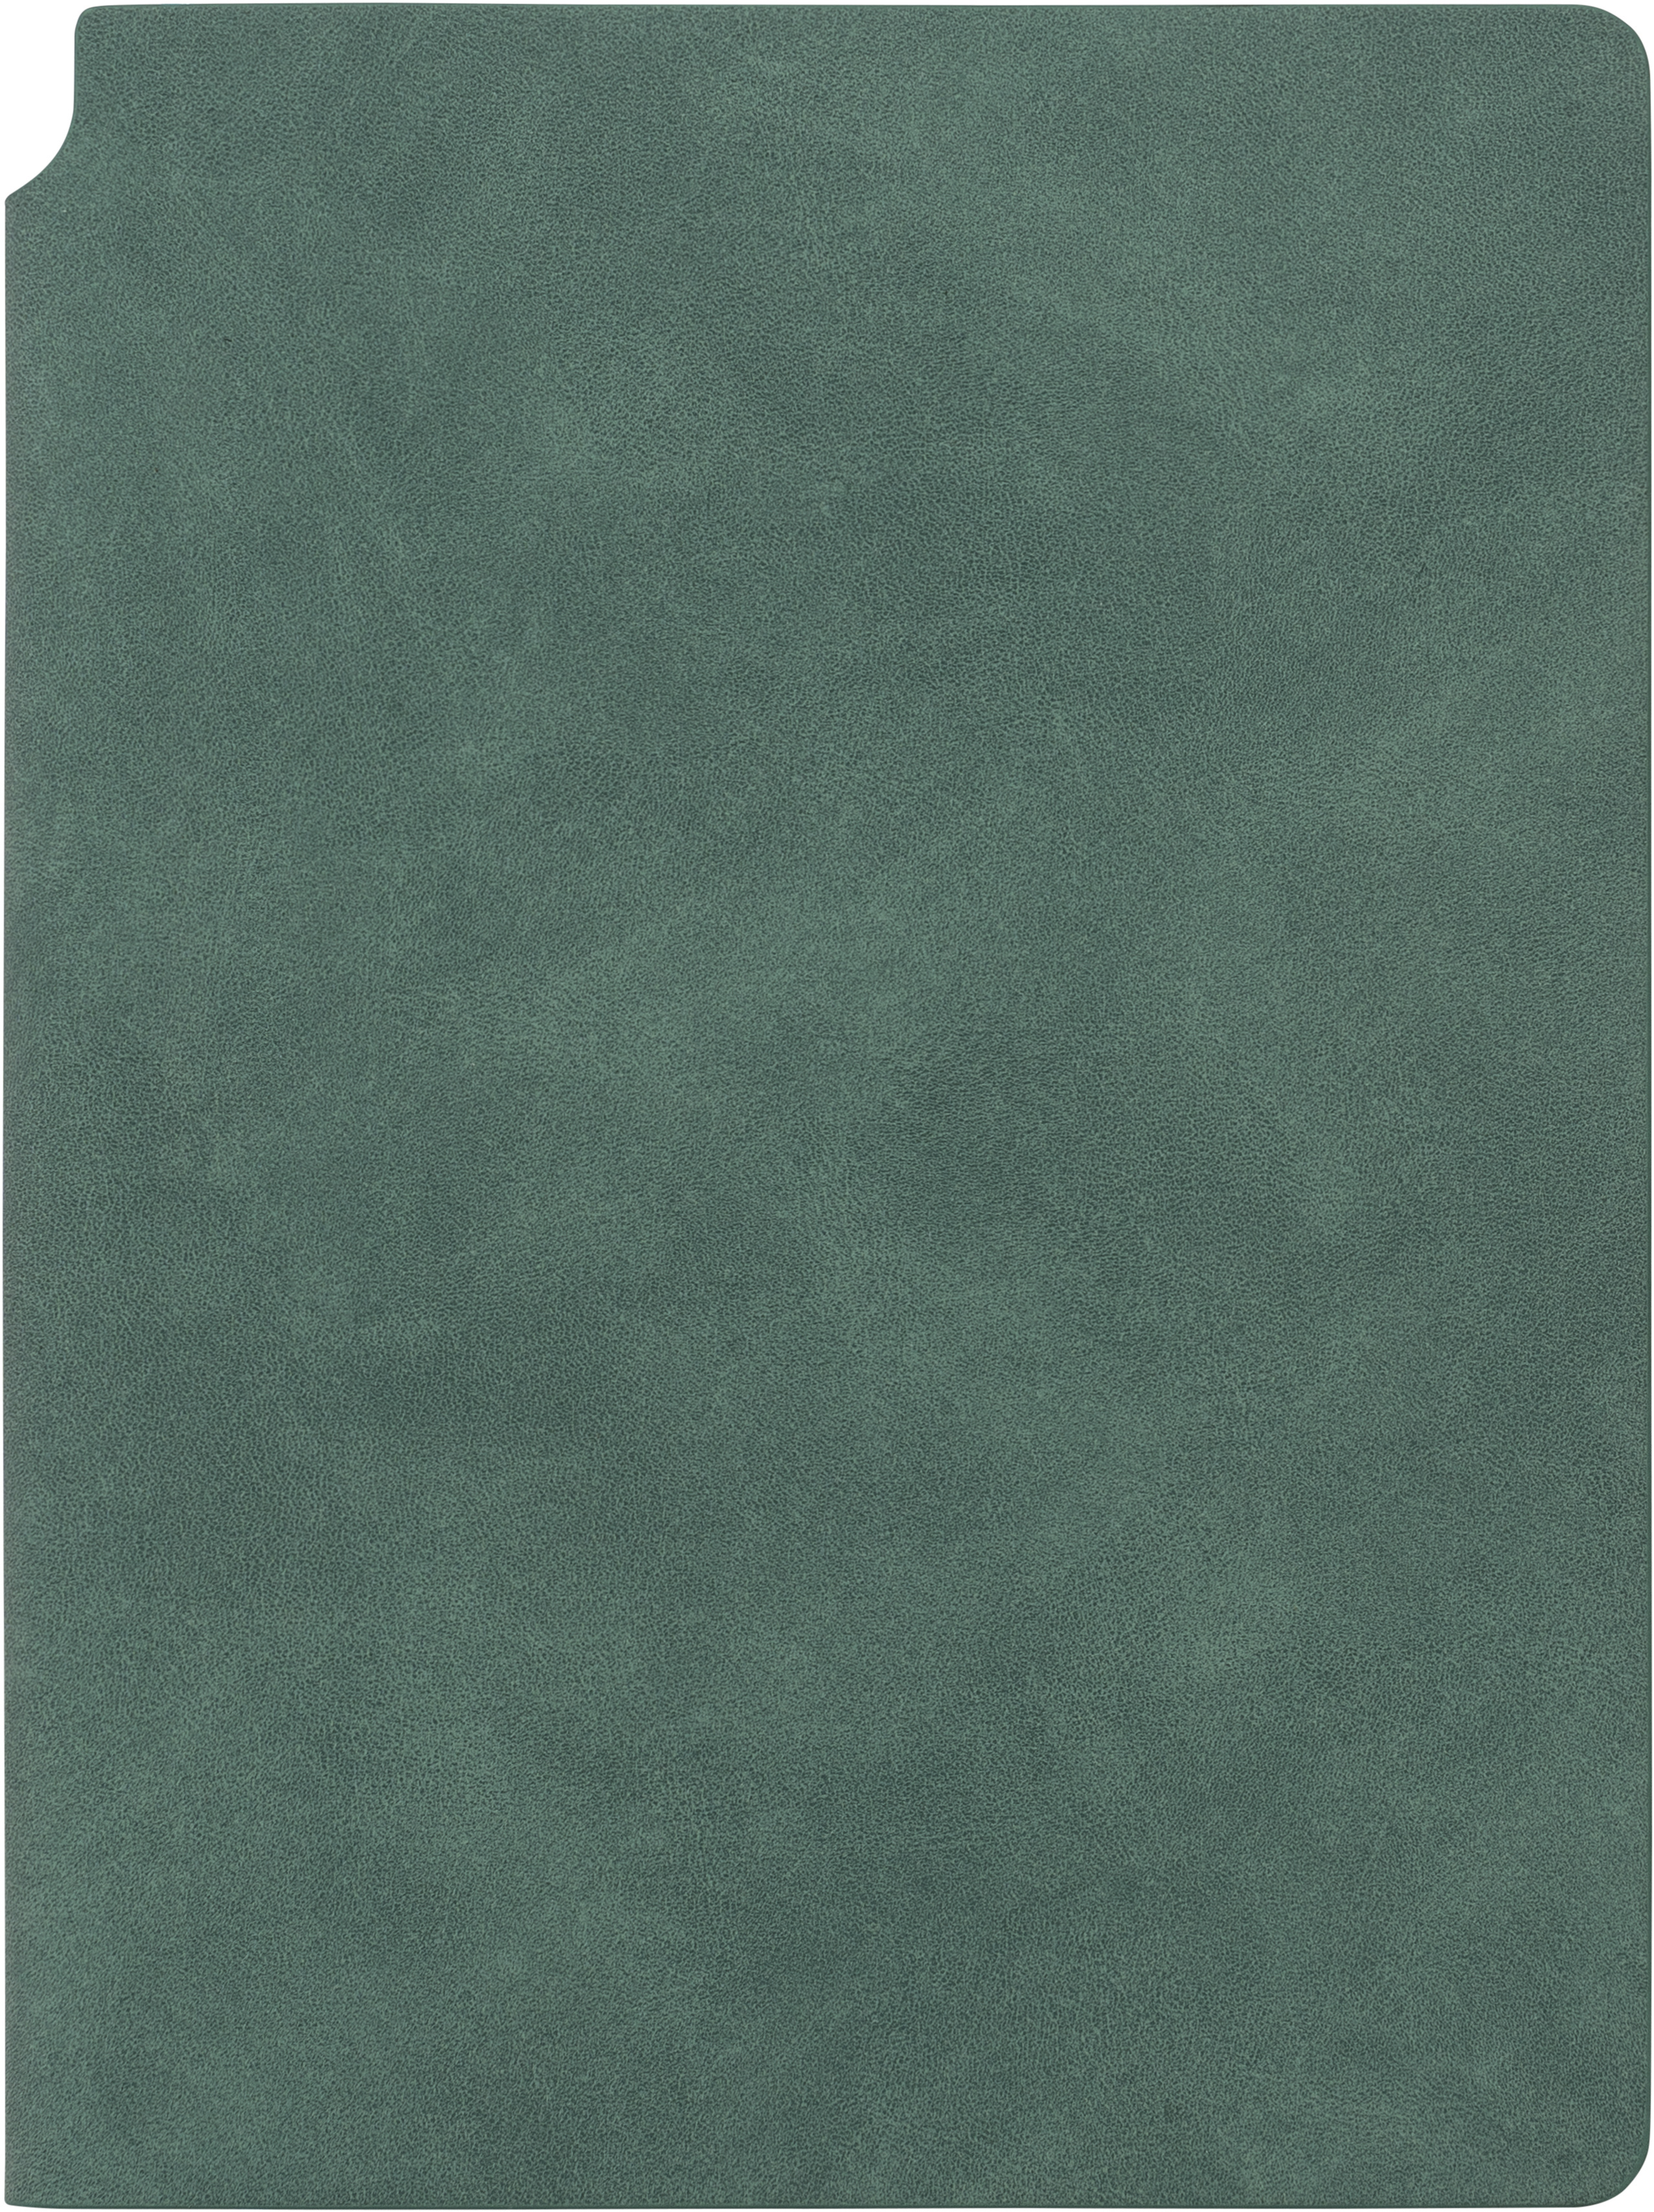 KOLMA Carnet de notes Smooth A5 06.440.39 doted, turquoise 144 flls. doted, turquoise 144 flls.